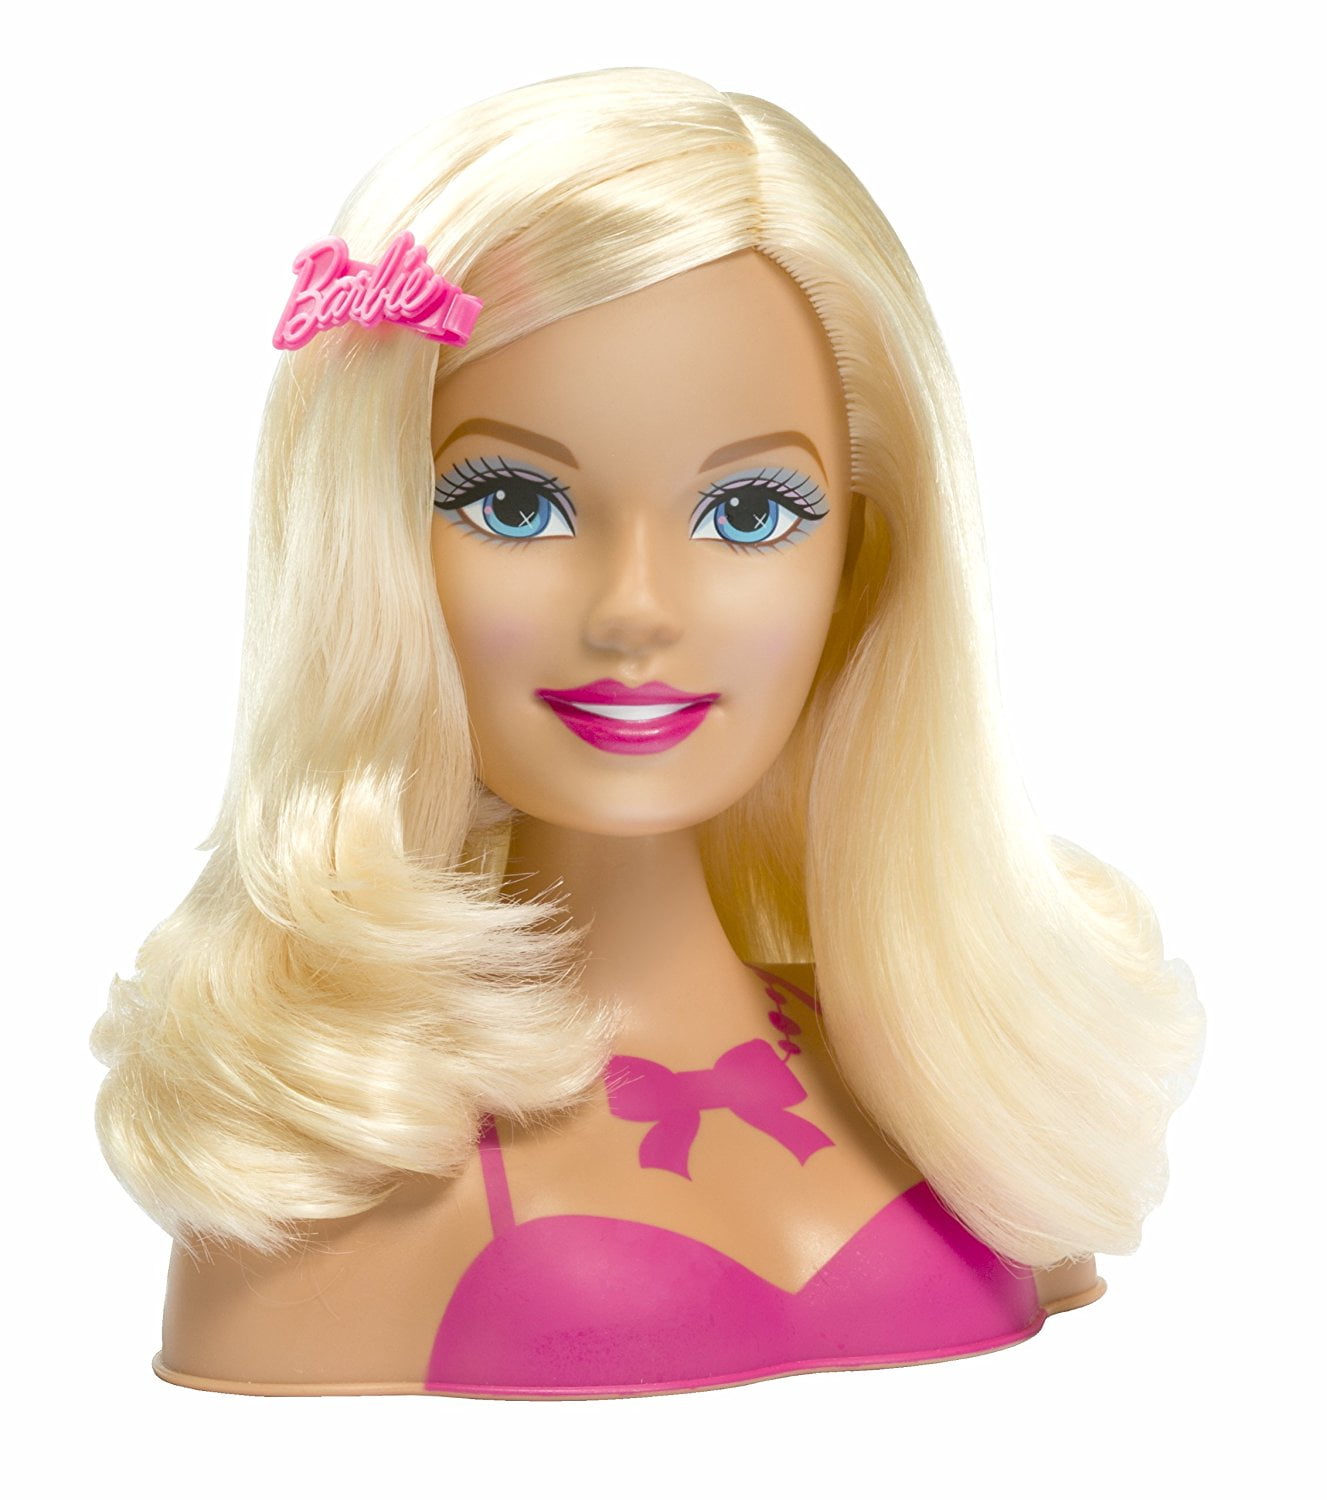 Barbie Styling Head - Walmart.com - Walmart.com